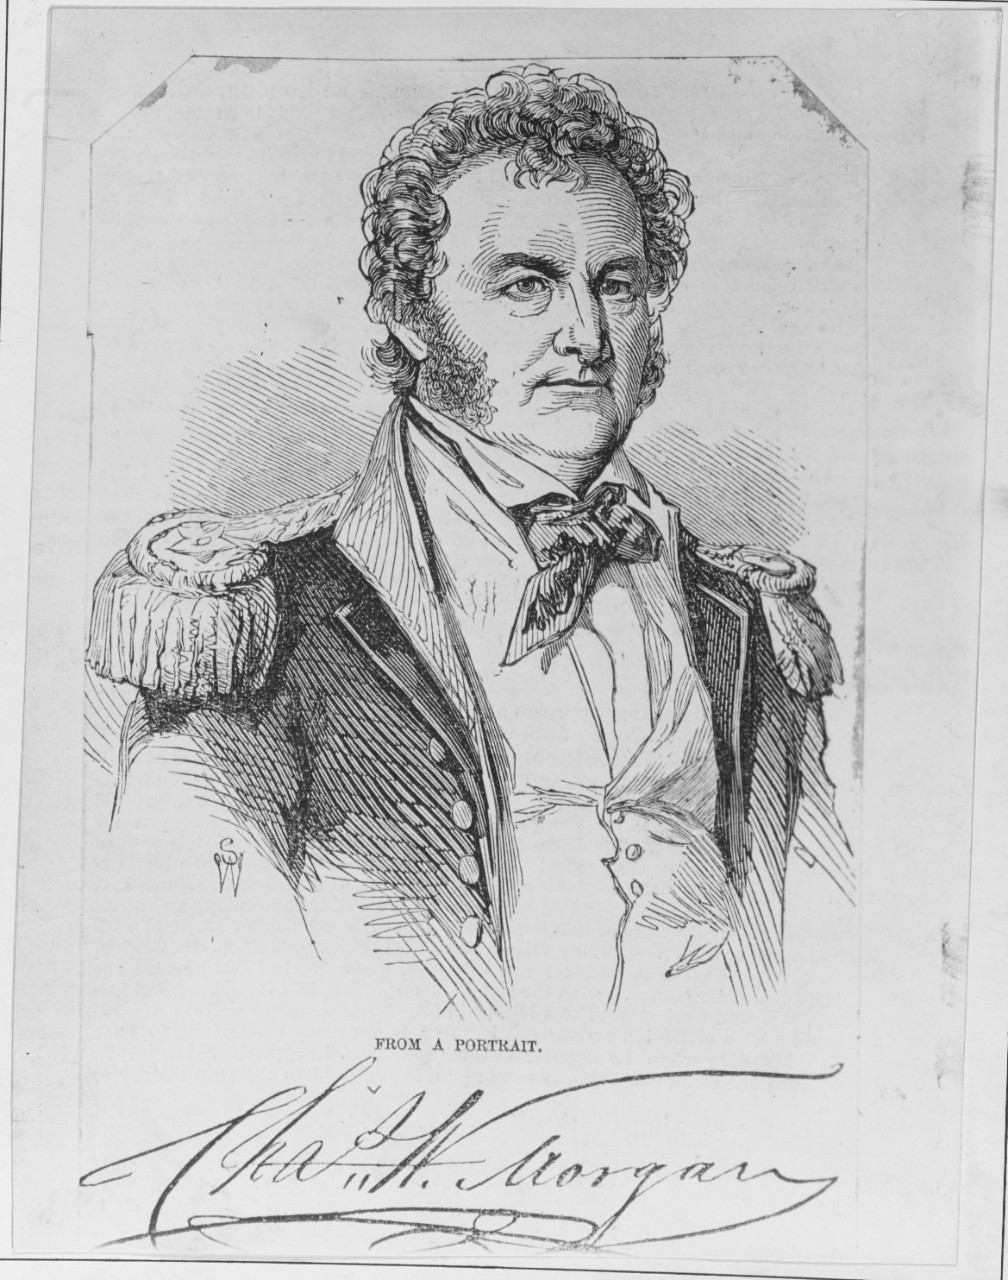 Captain Charles W. Morgan, USN